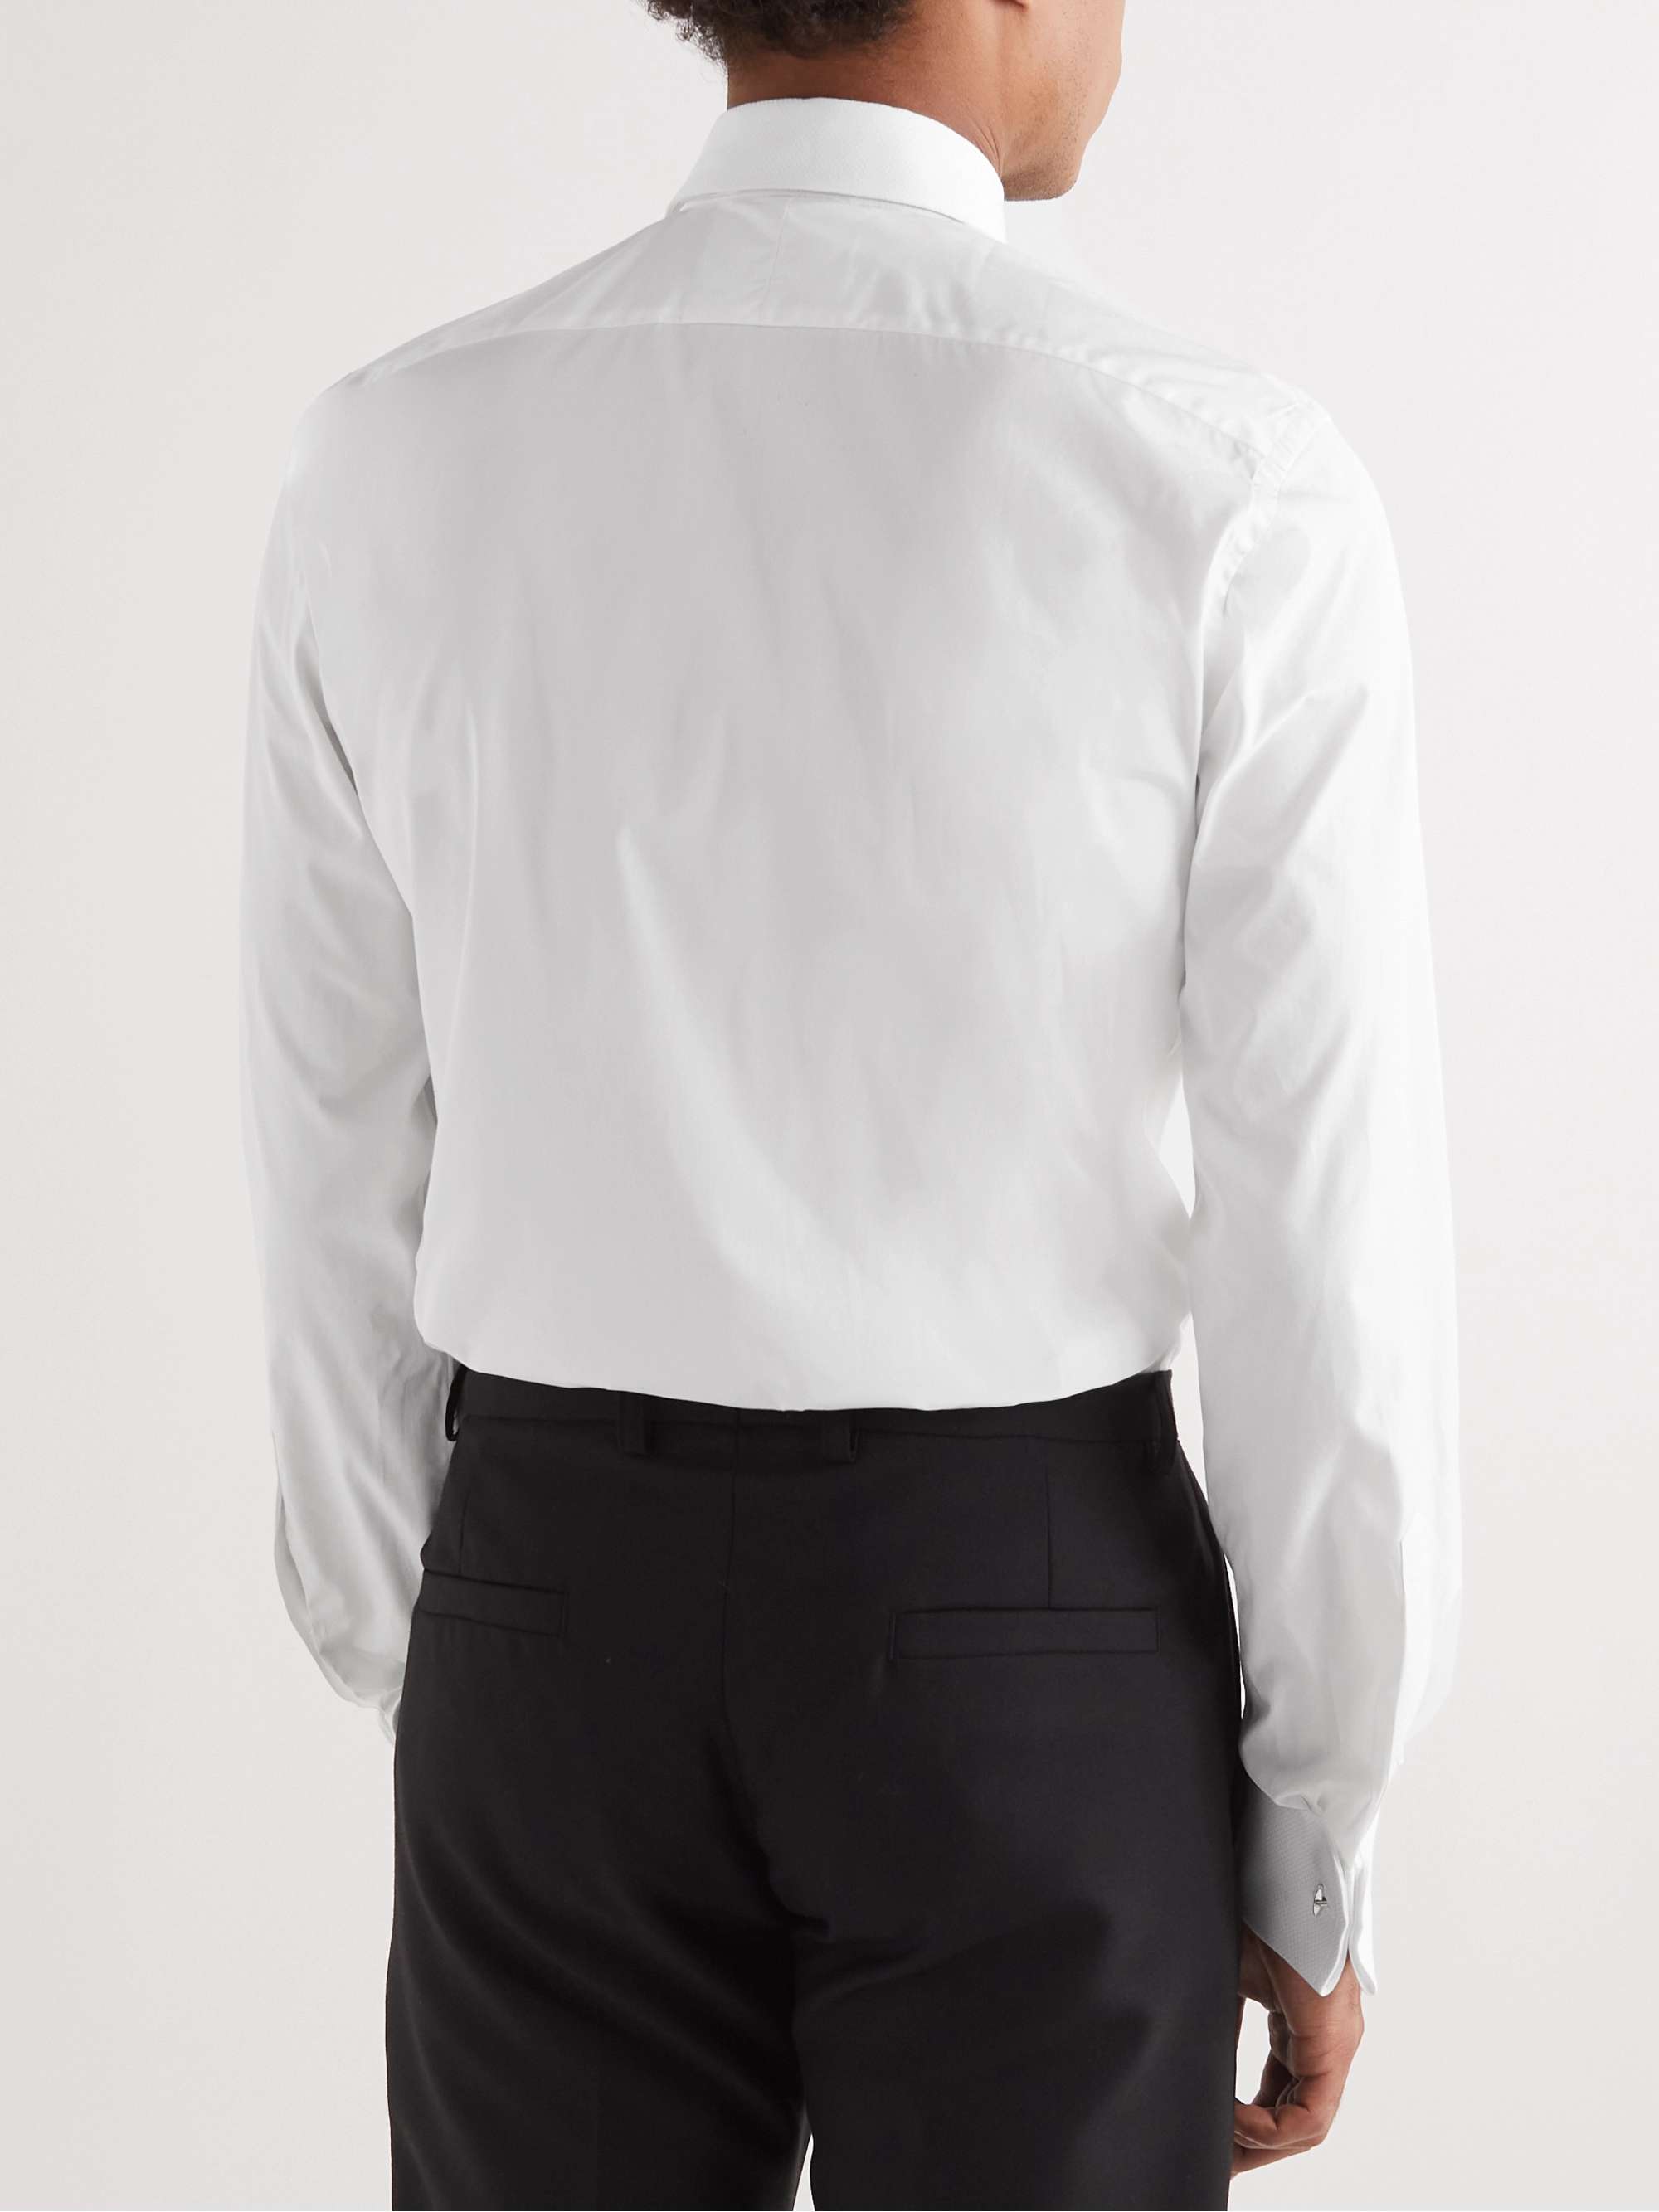 TOM FORD Double-Cuff Cotton-Piqué Tuxedo Shirt